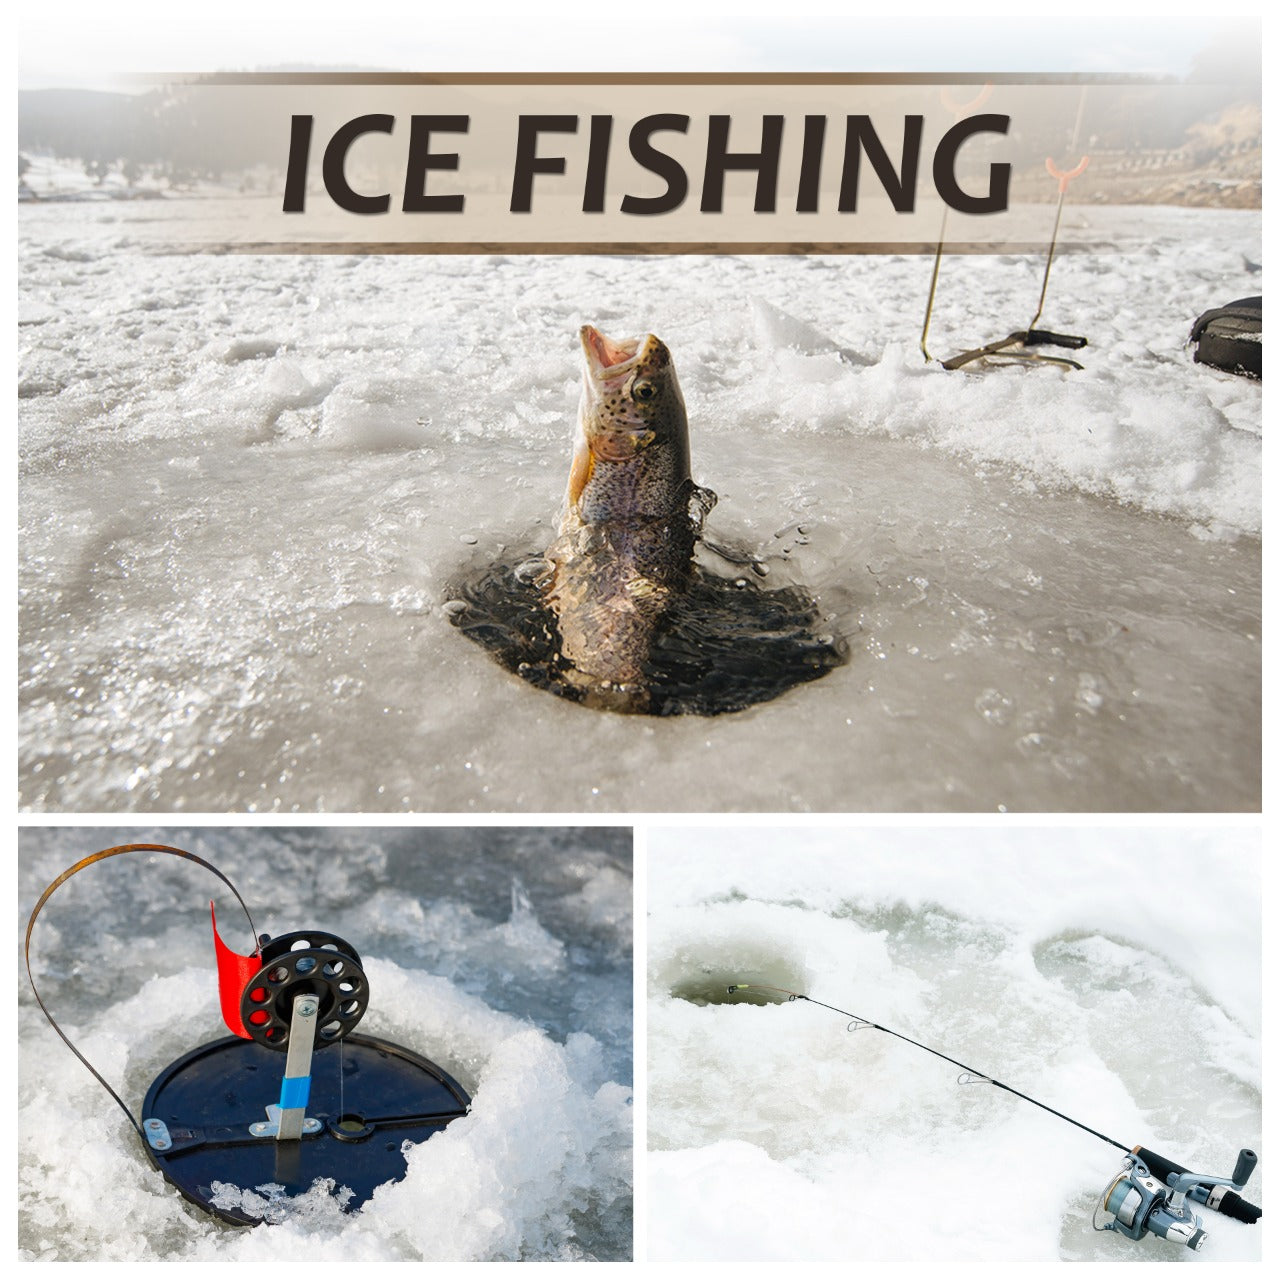 ICE FISHING - Fishing Nice